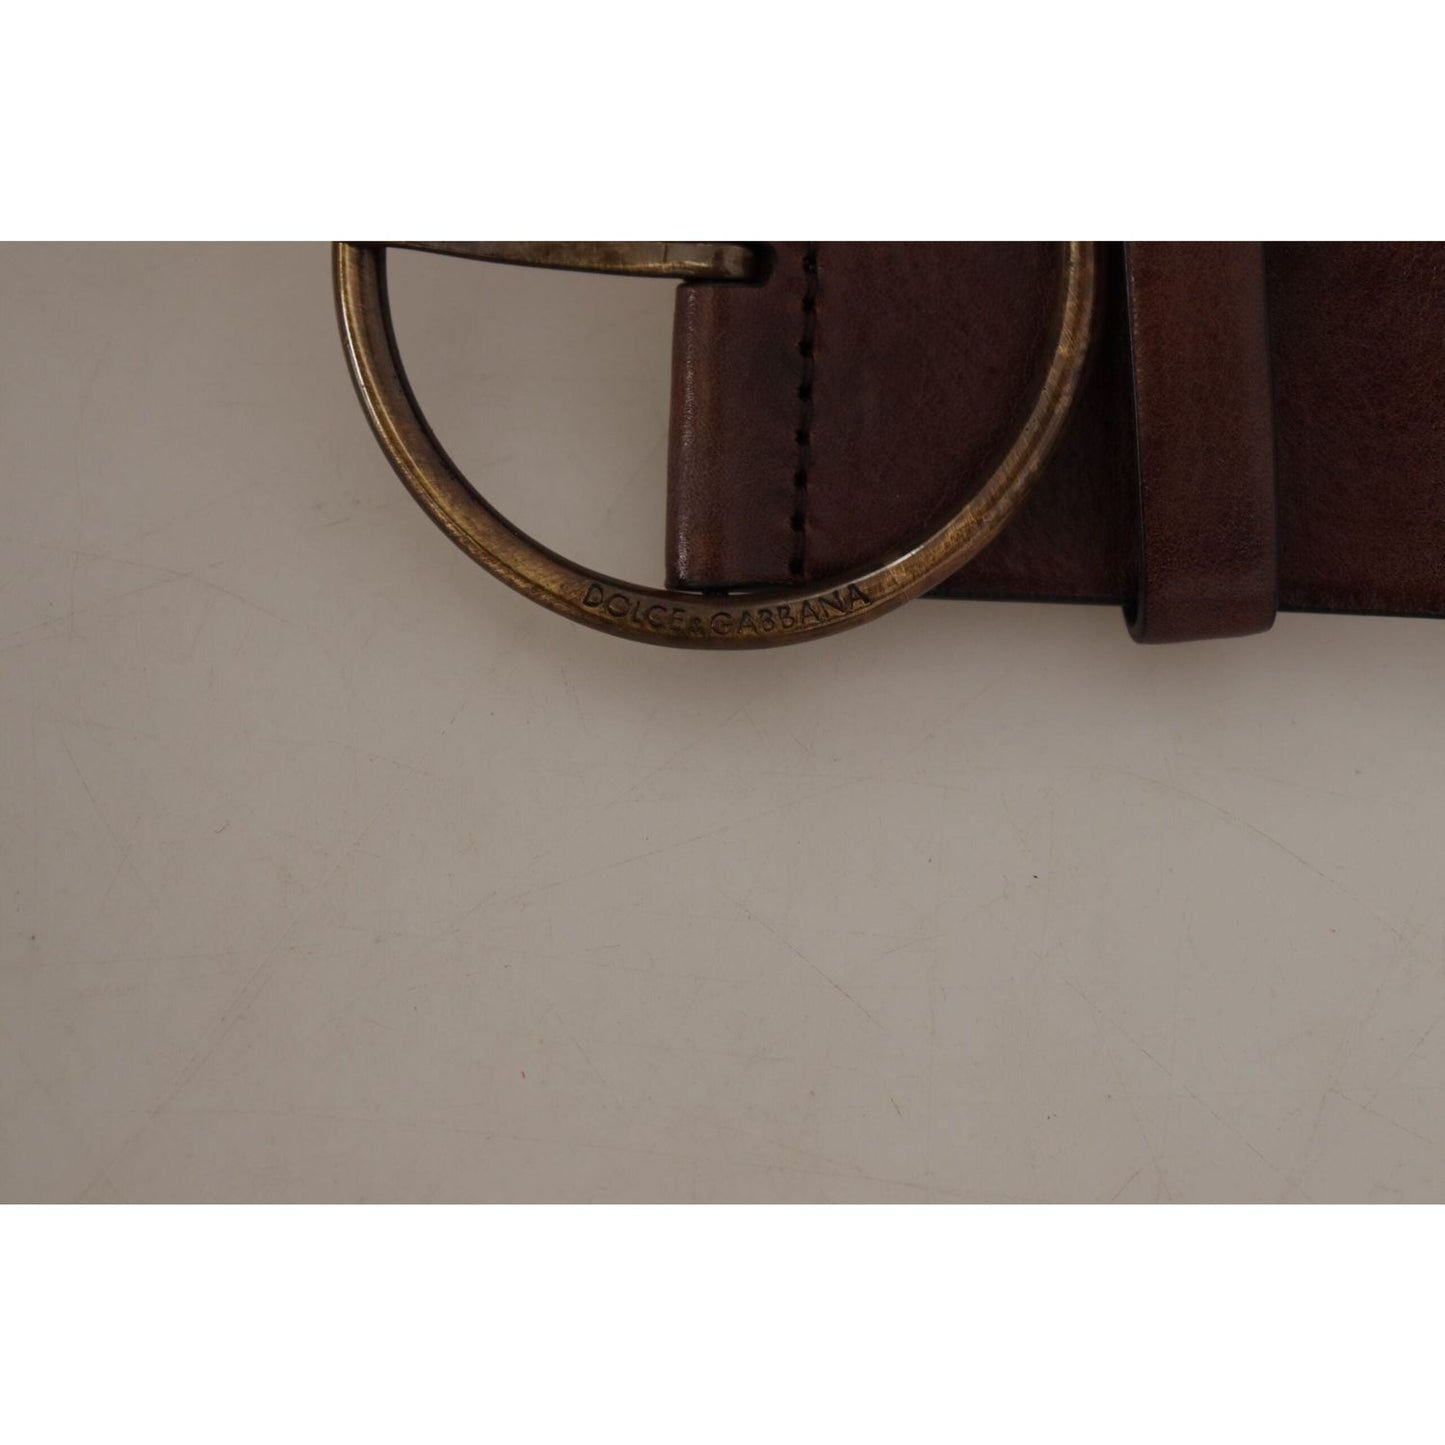 Dolce & Gabbana Elegant Leather Belt with Engraved Buckle dark-brown-wide-waist-leather-metal-round-buckle-belt IMG_9740-1-scaled-14568812-1fd.jpg